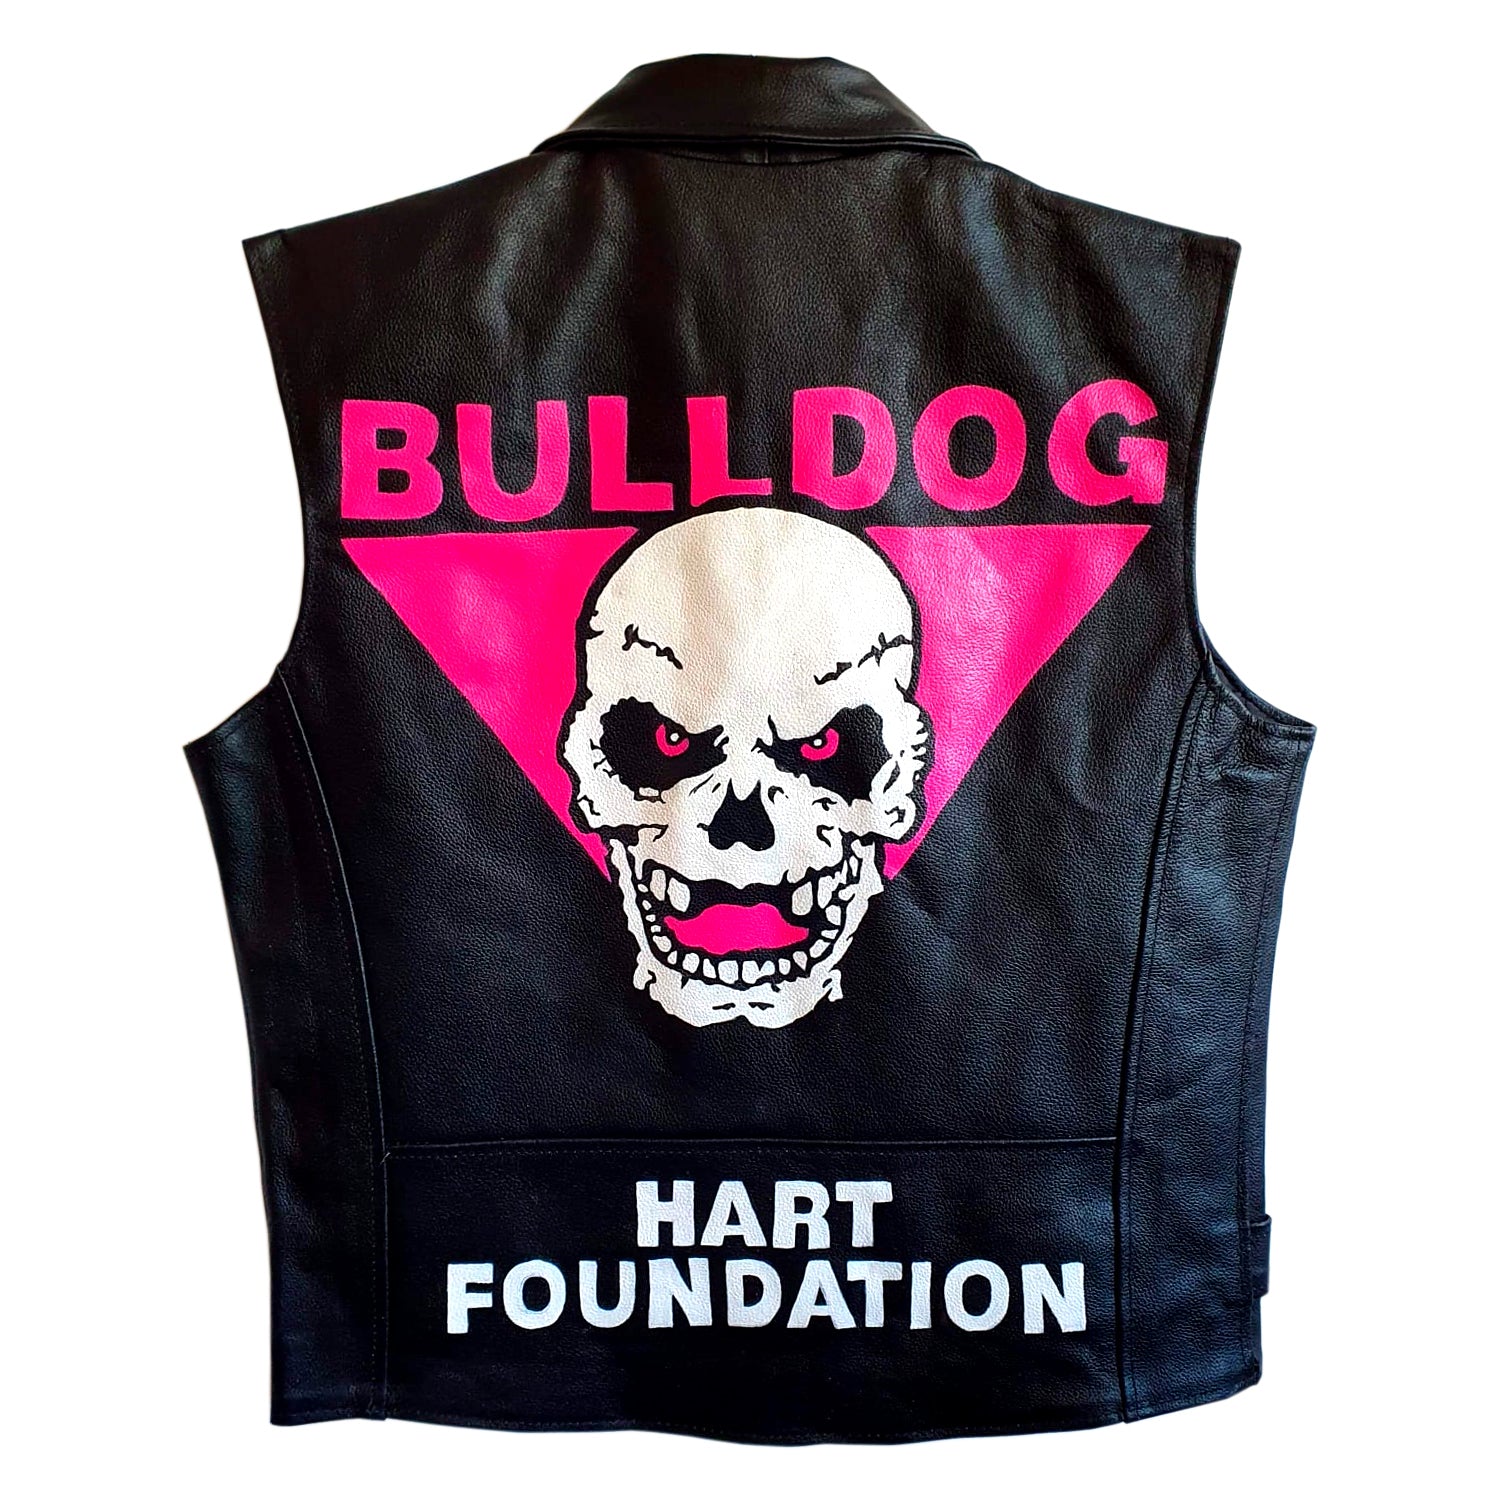 British Bulldog Hart Foundation Replica Leather Jacket (Batch #1)